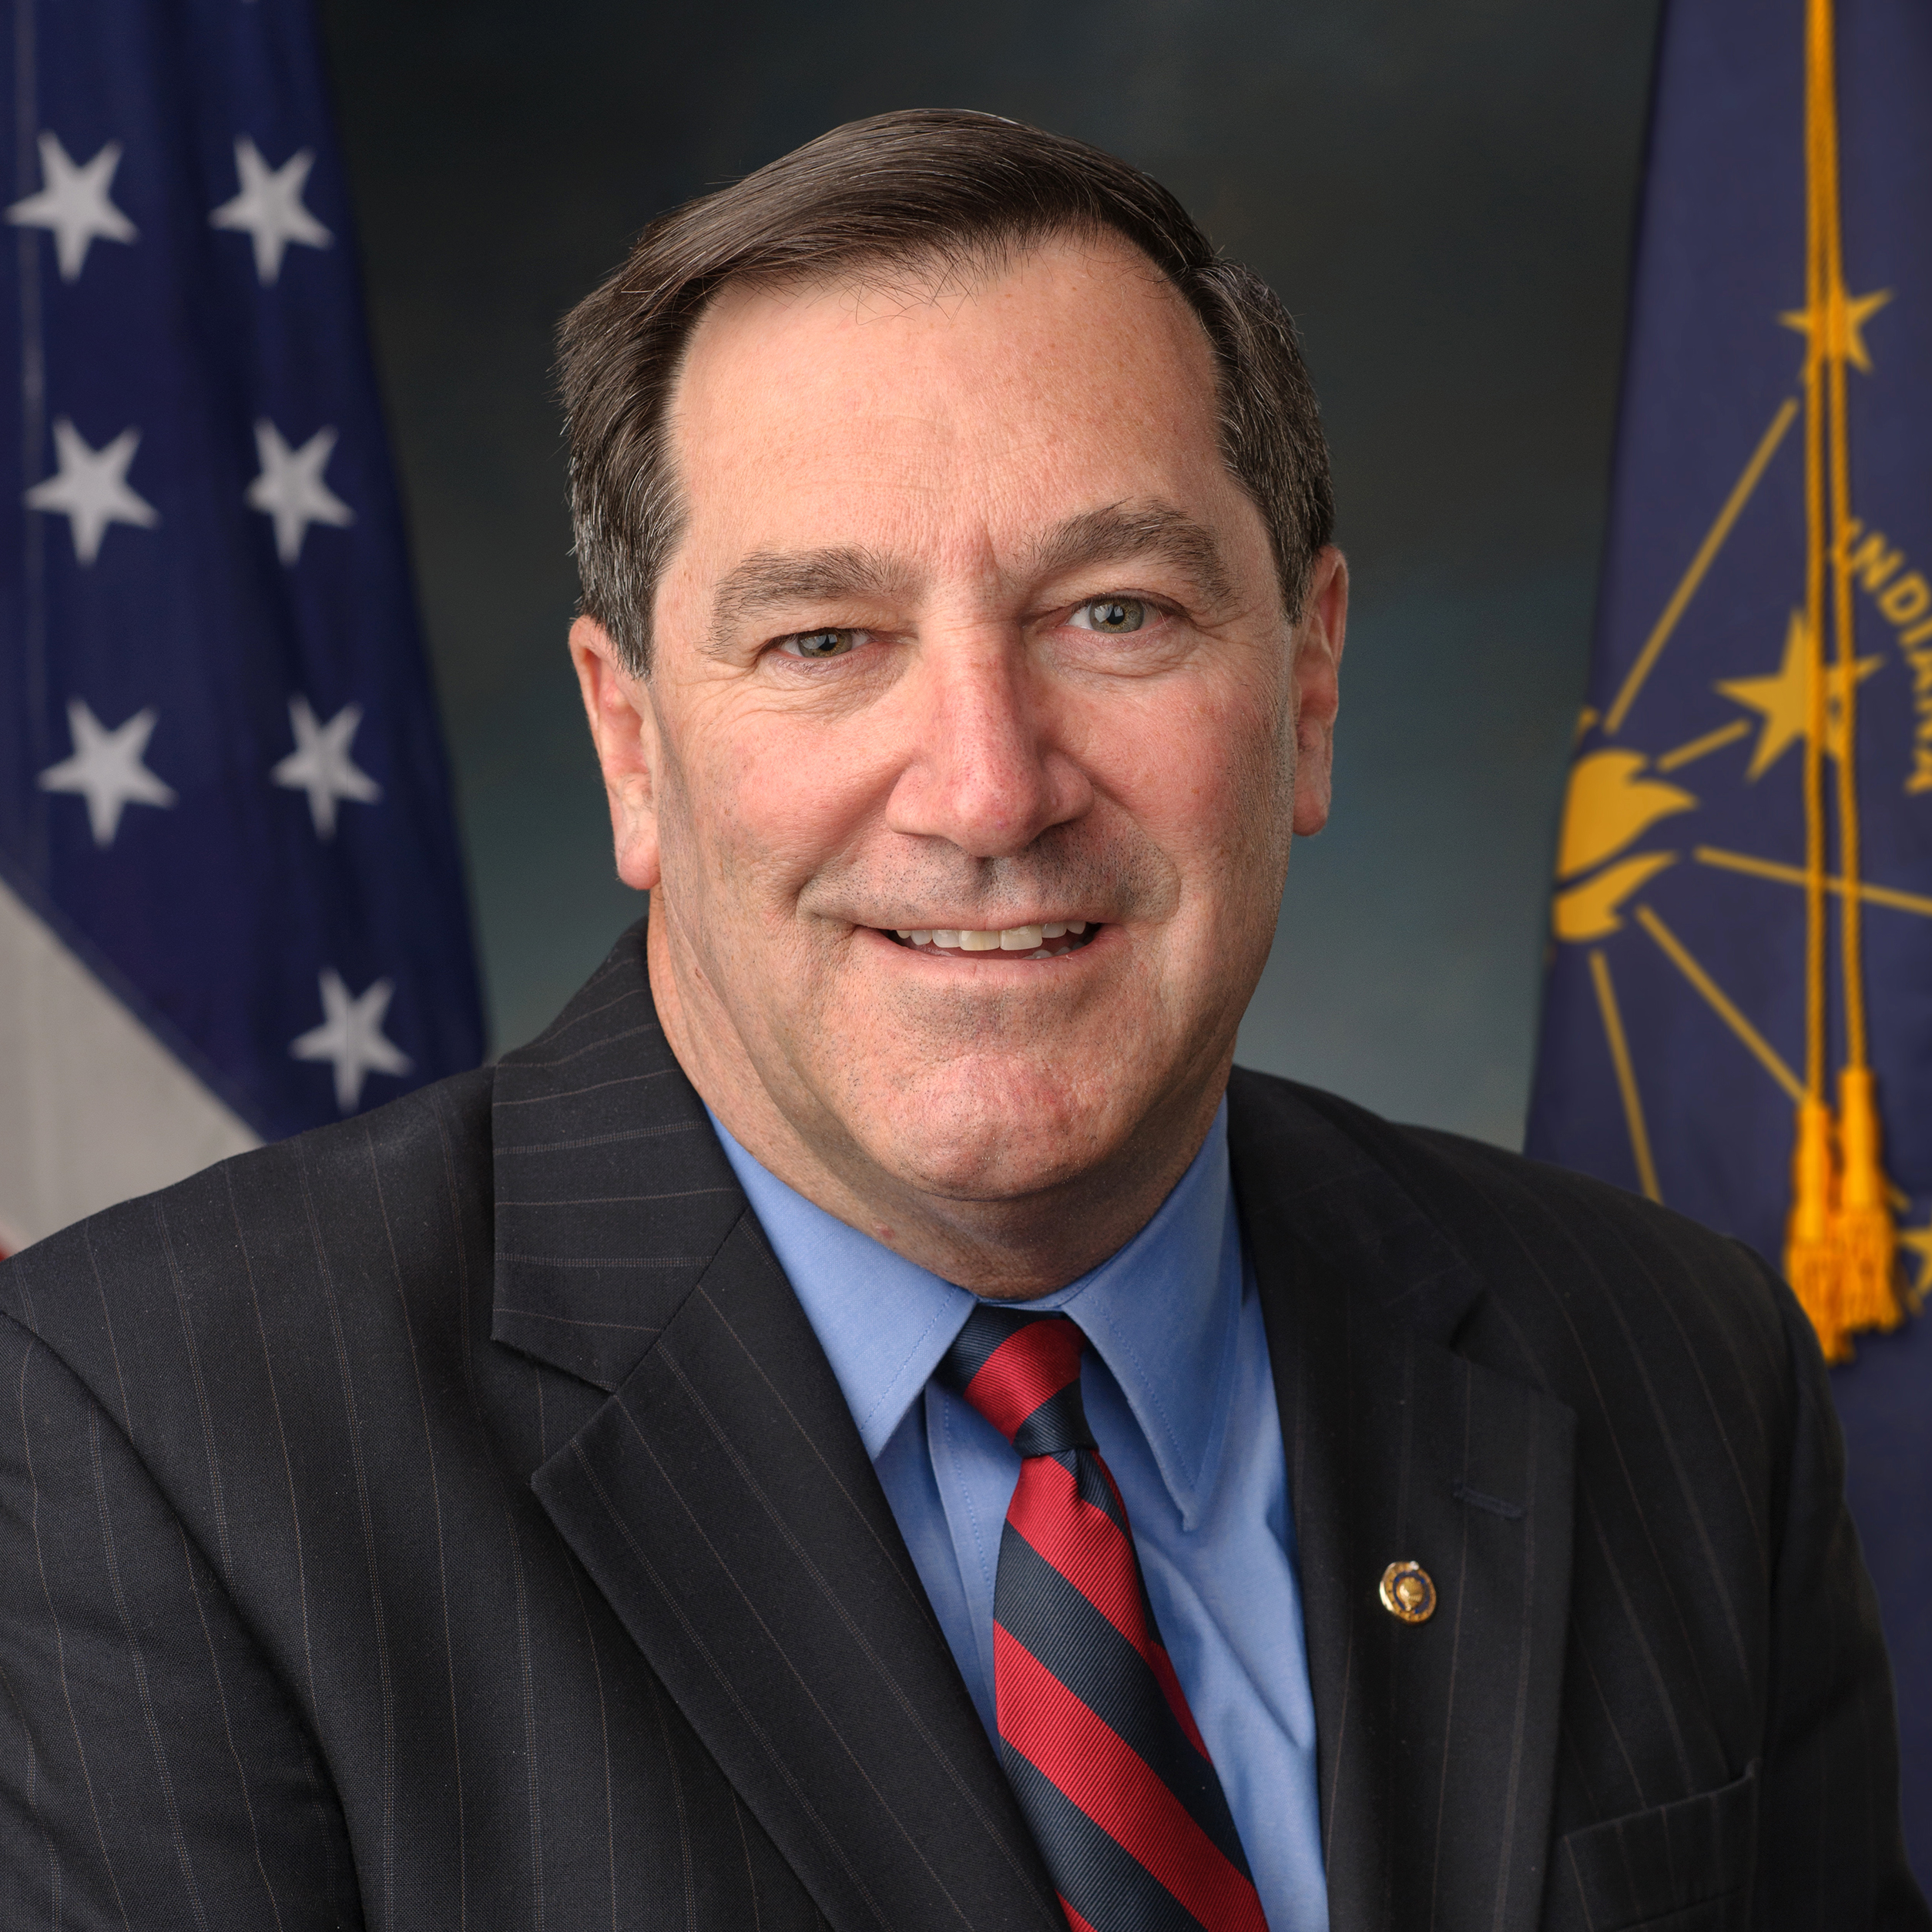 U.S. Senator Joe Donnelly